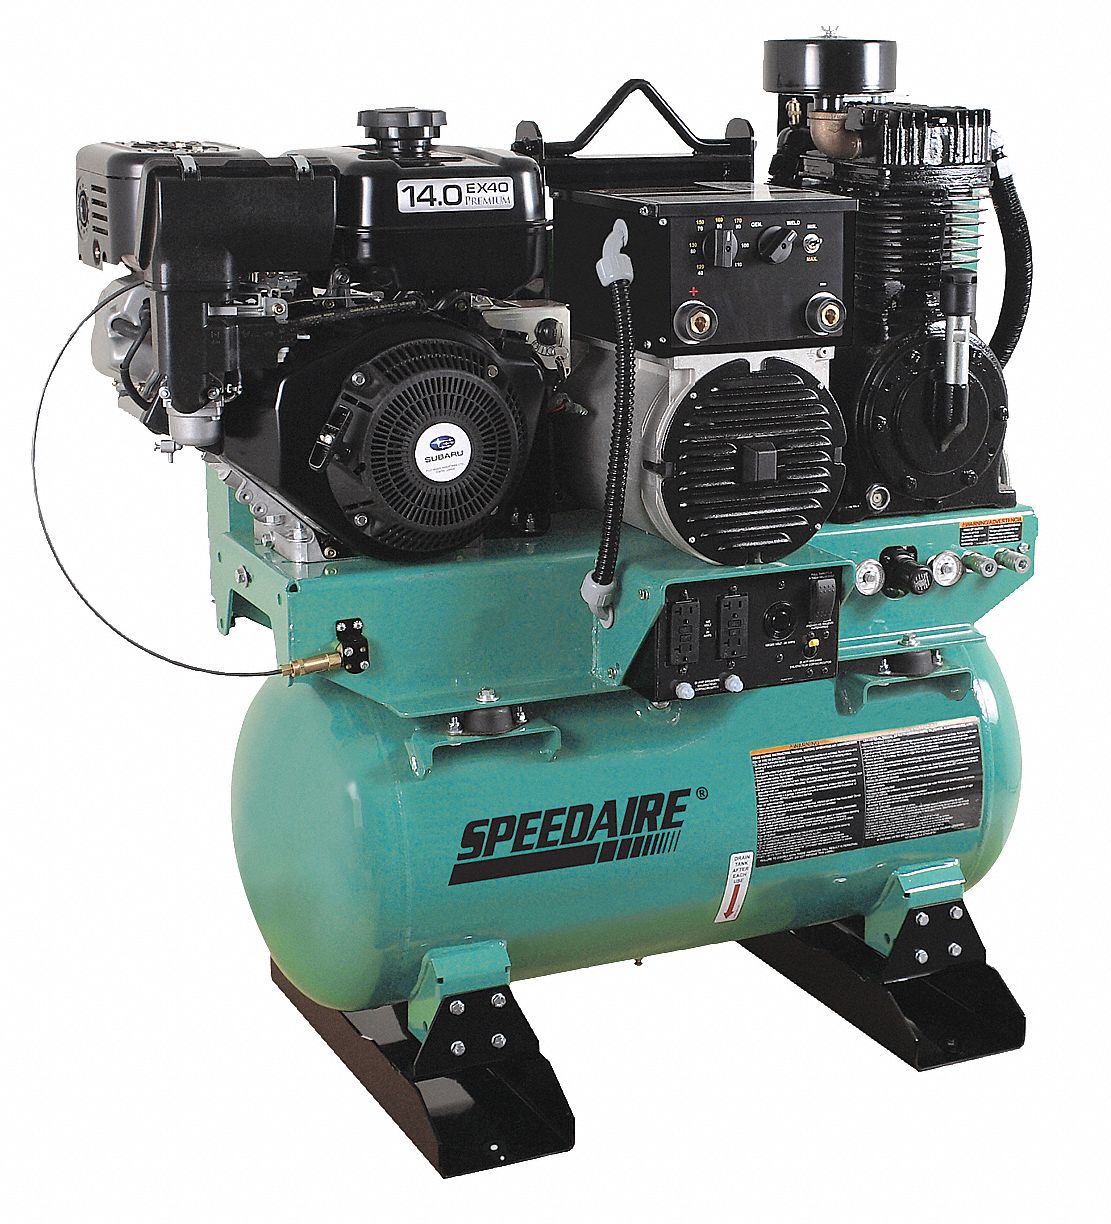 15D802 - Air Compressor/Generator/Welder